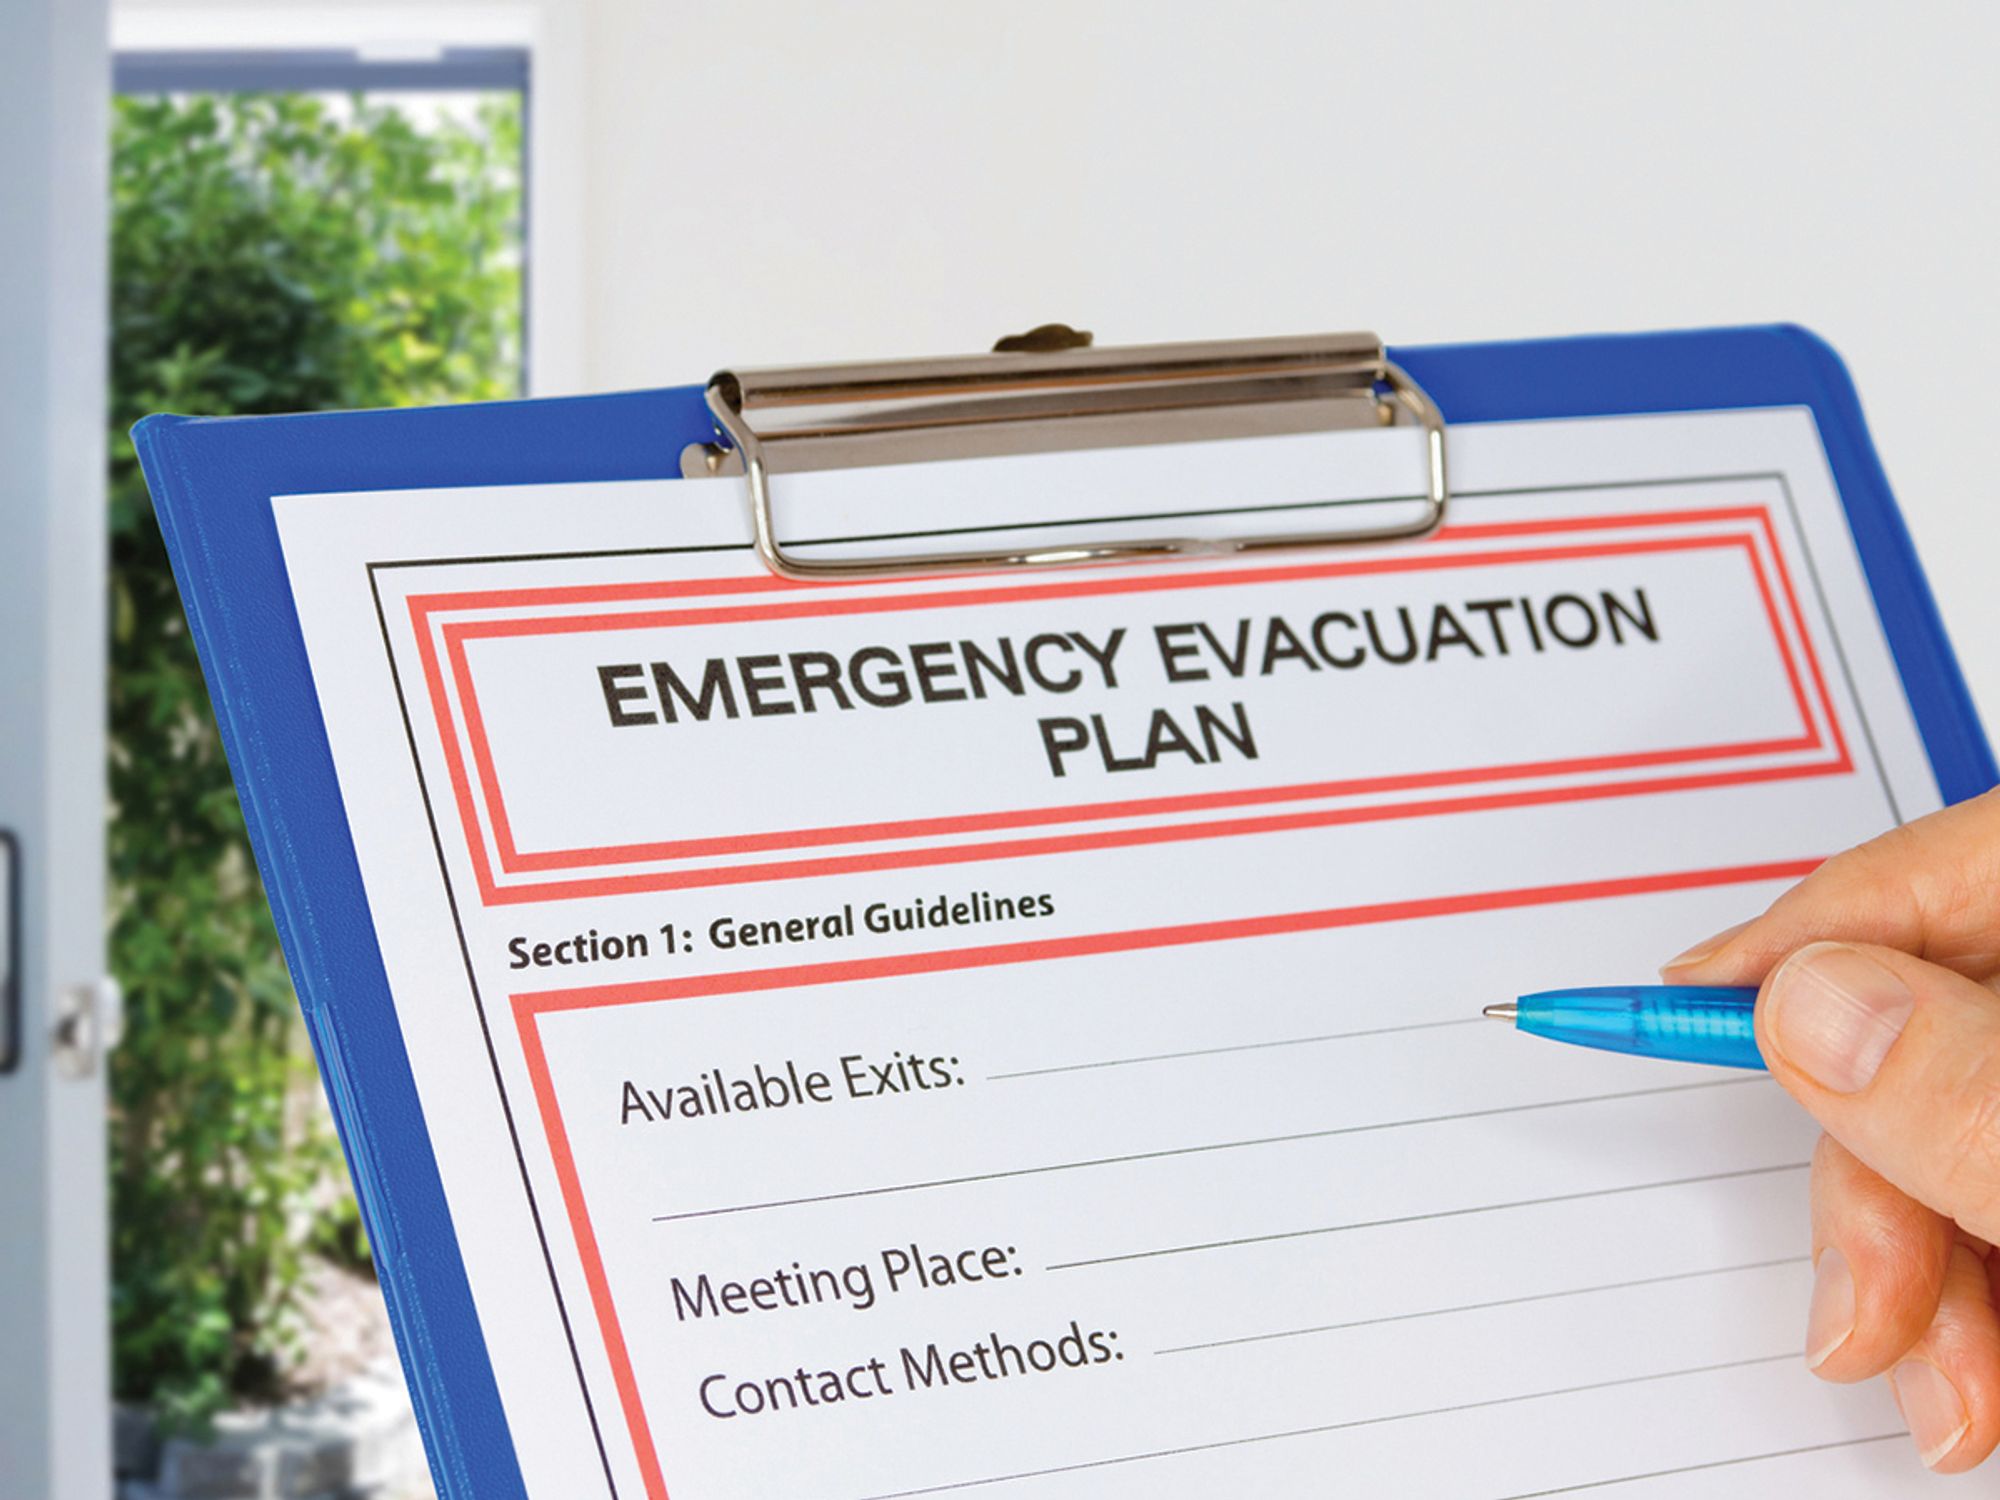 Evacuation planning